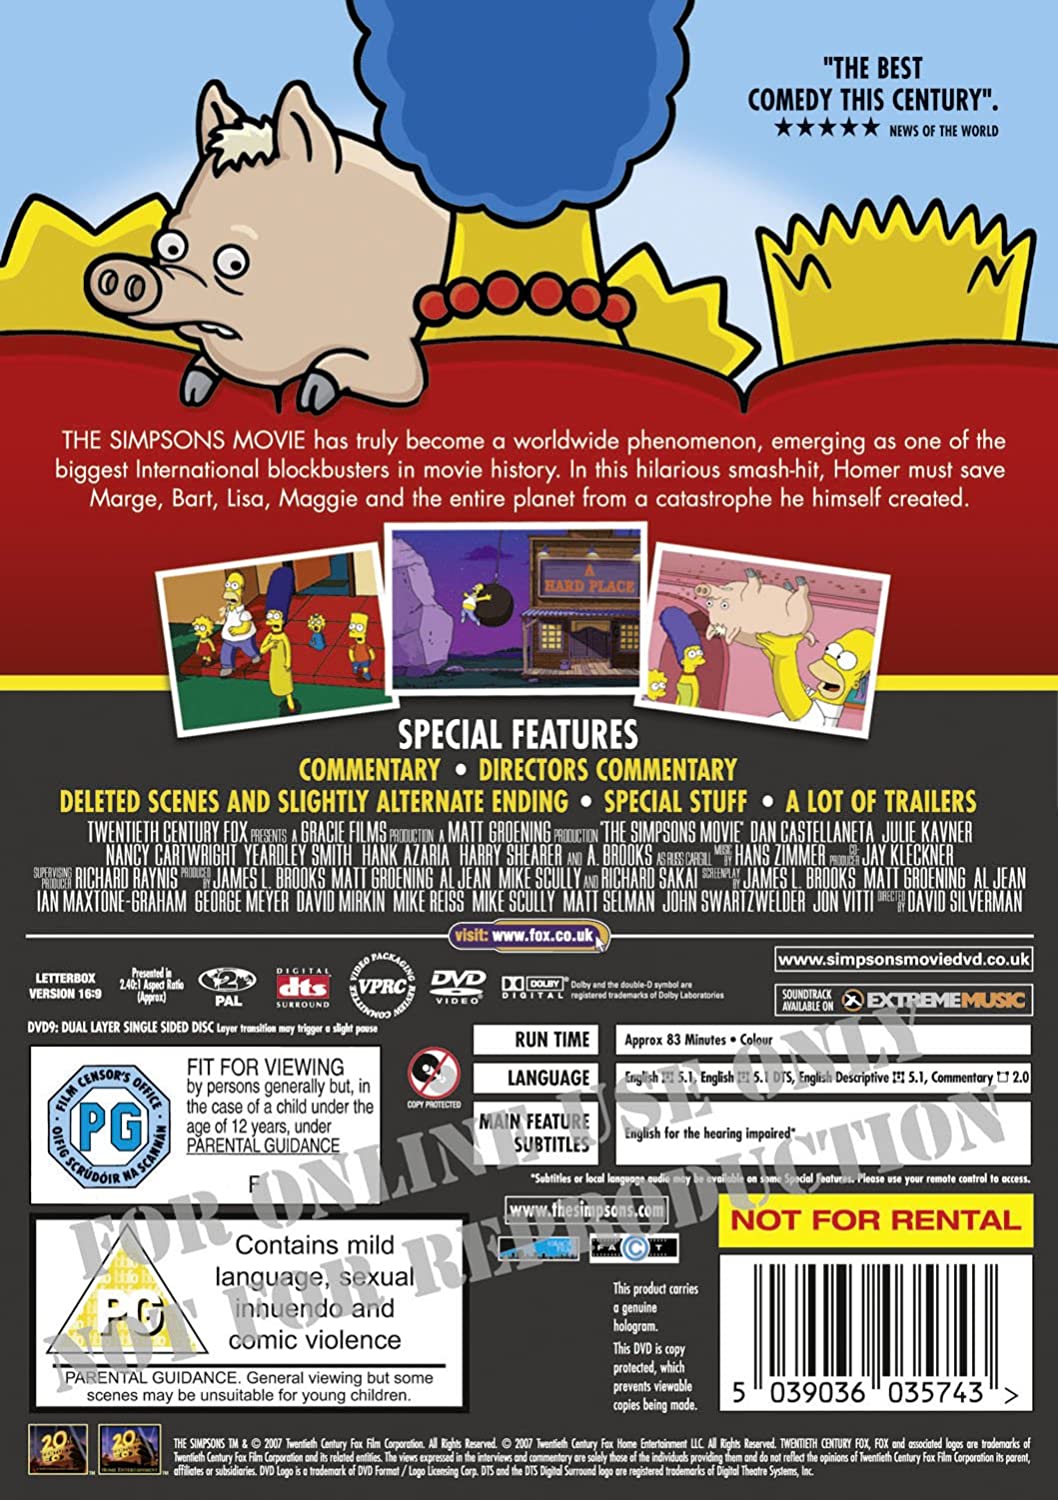 The Simpsons Movie [2007] - Comedy/Adventure [DVD]